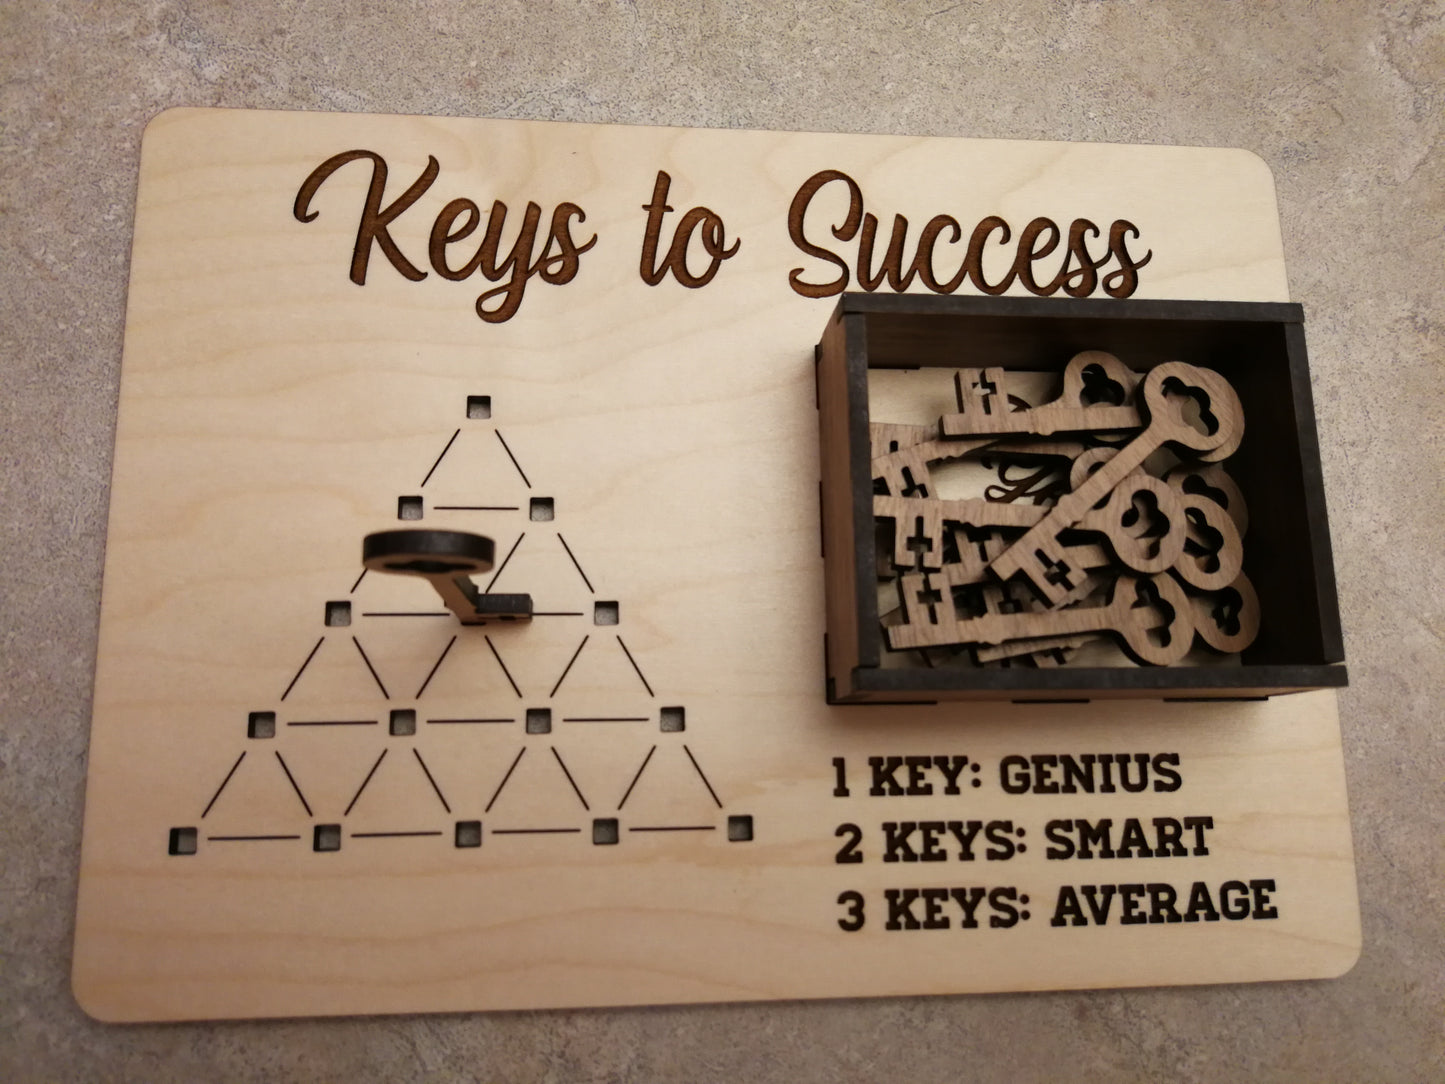 Keys to Success